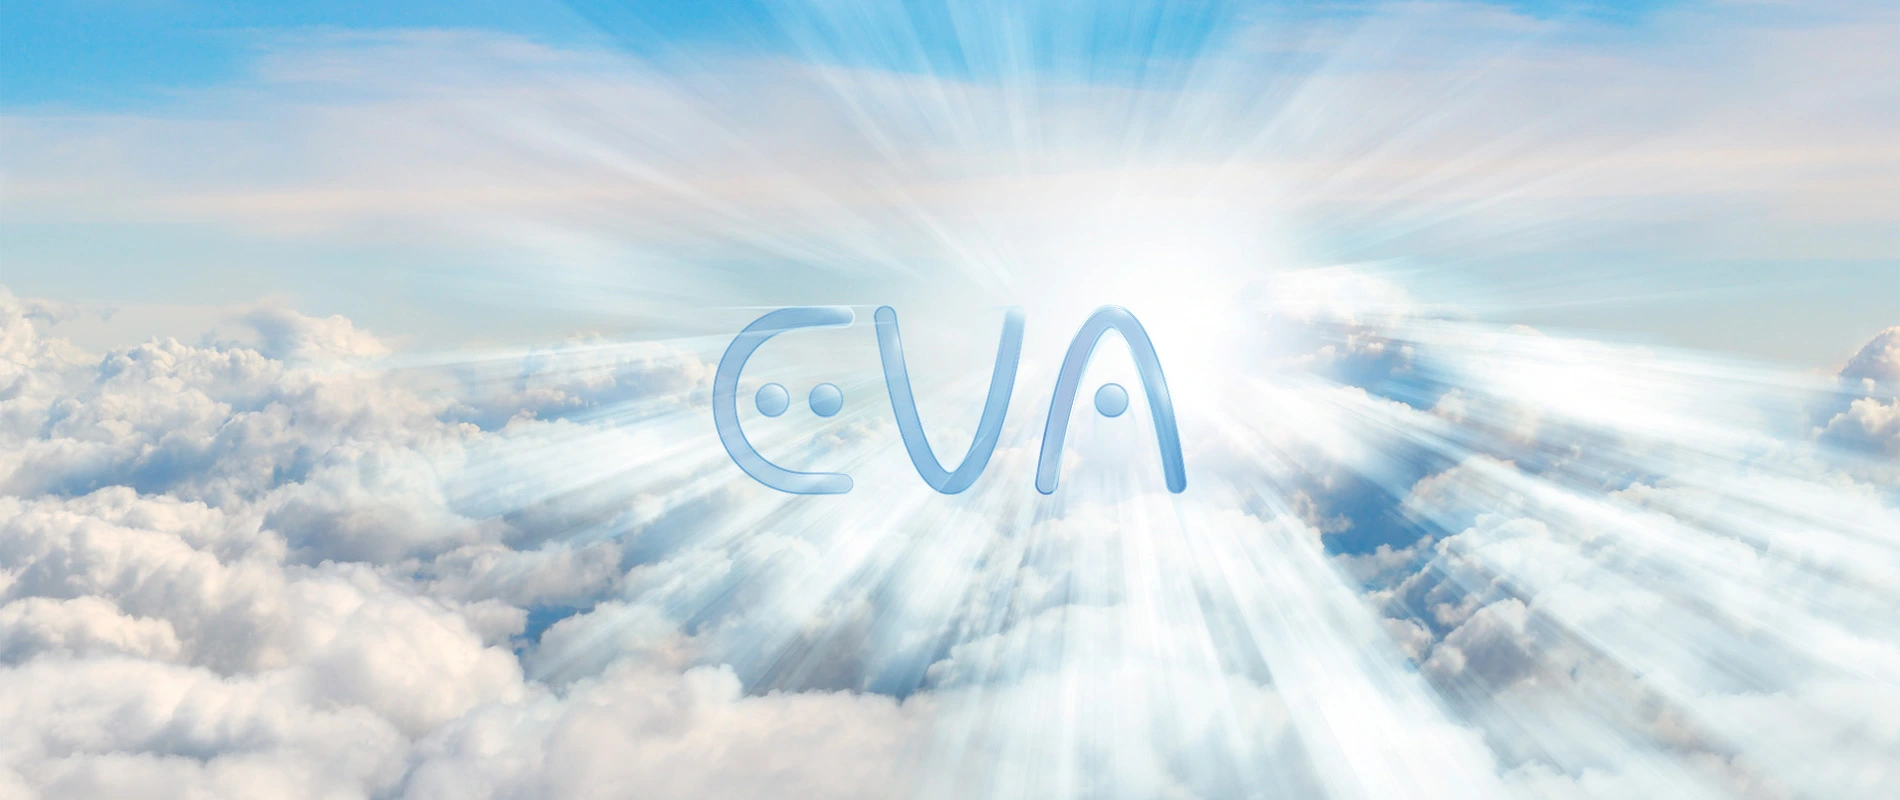 EVA logo on cloud banner